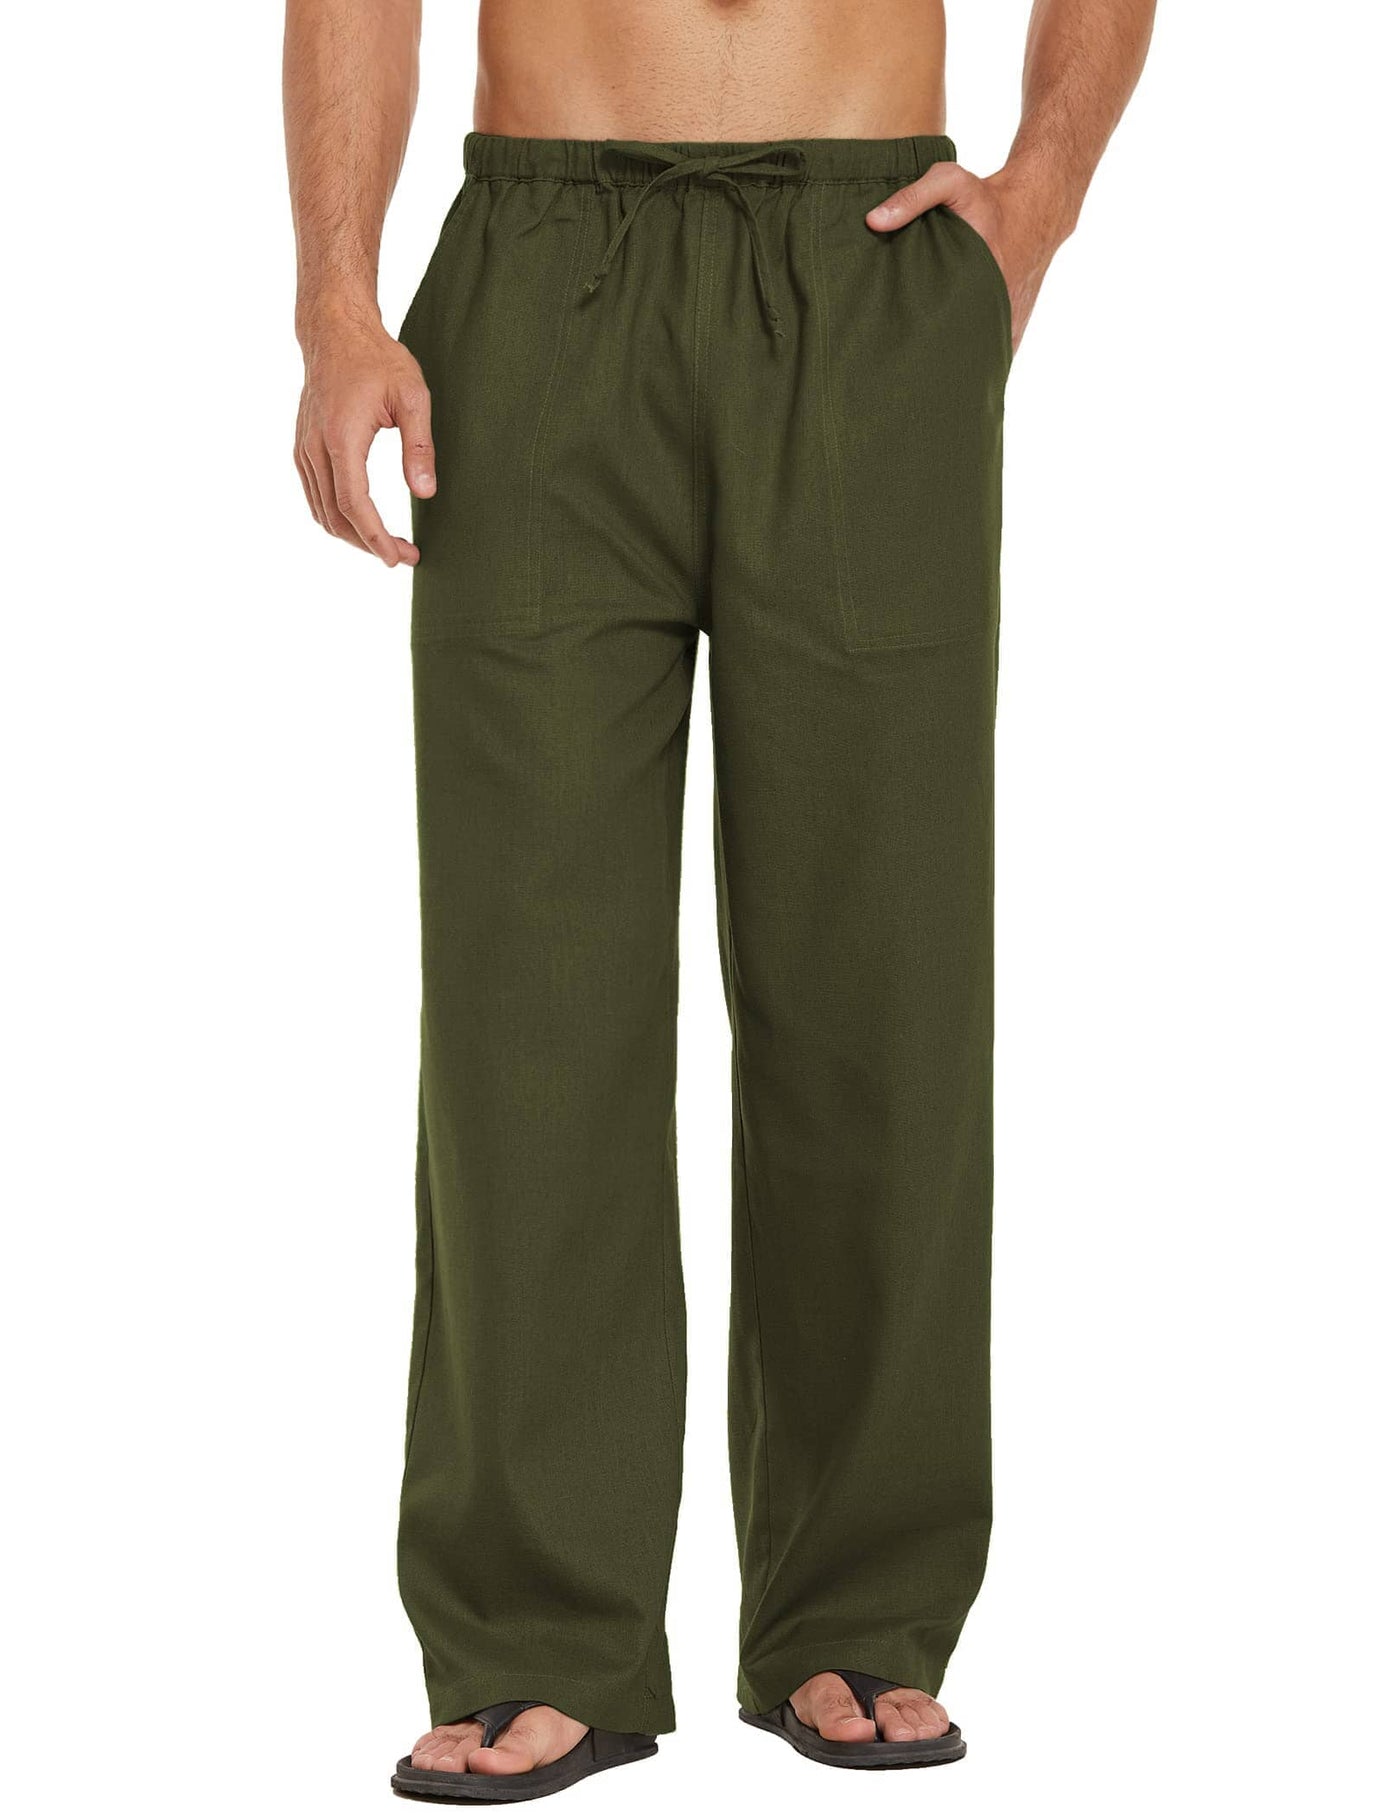 Coofandy Linen Style Loose Waist Yoga Pants (US Only) Pants coofandy Army Green S 